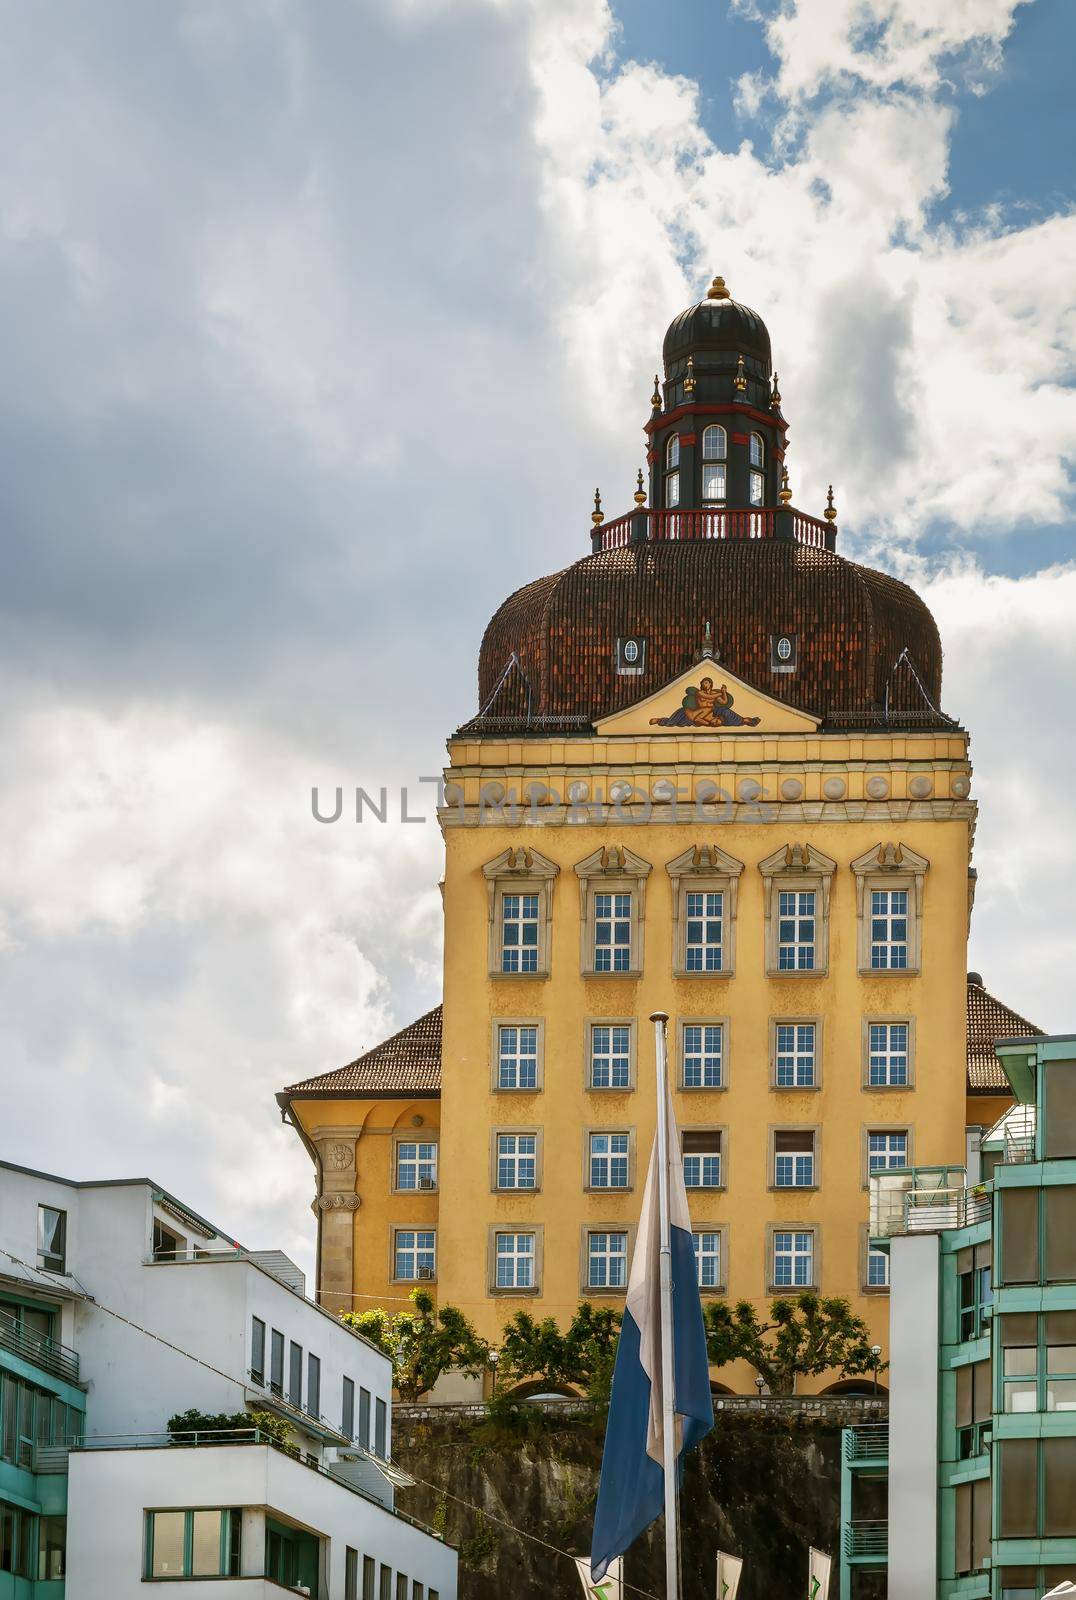 Building in Lucerne, Swizerland by borisb17